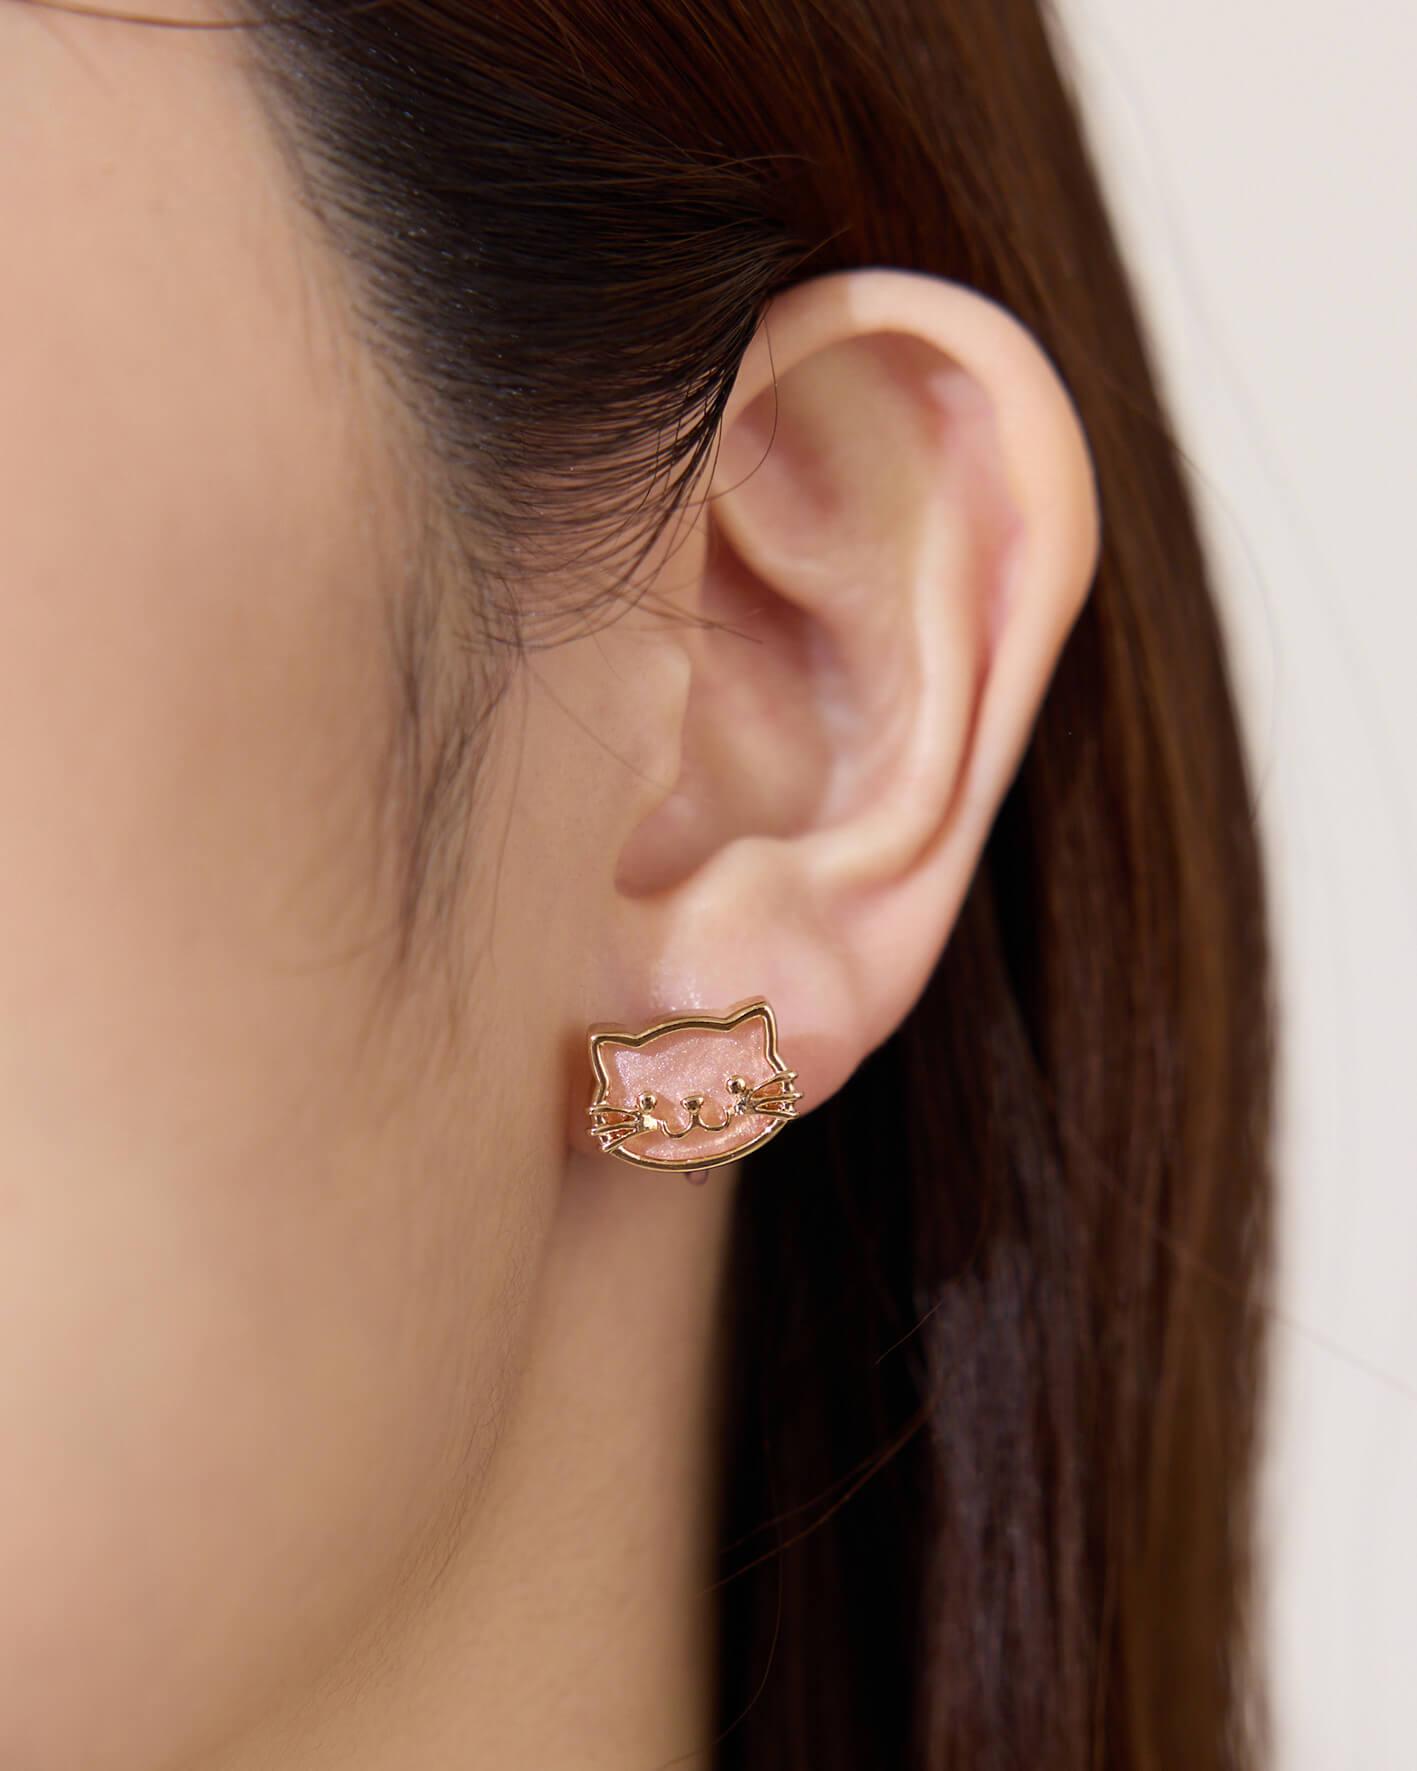 Eco安珂,韓國飾品,韓國耳環,耳針式耳環,矽膠夾耳環,透明耳夾耳環,無痛耳夾耳環,貓耳環